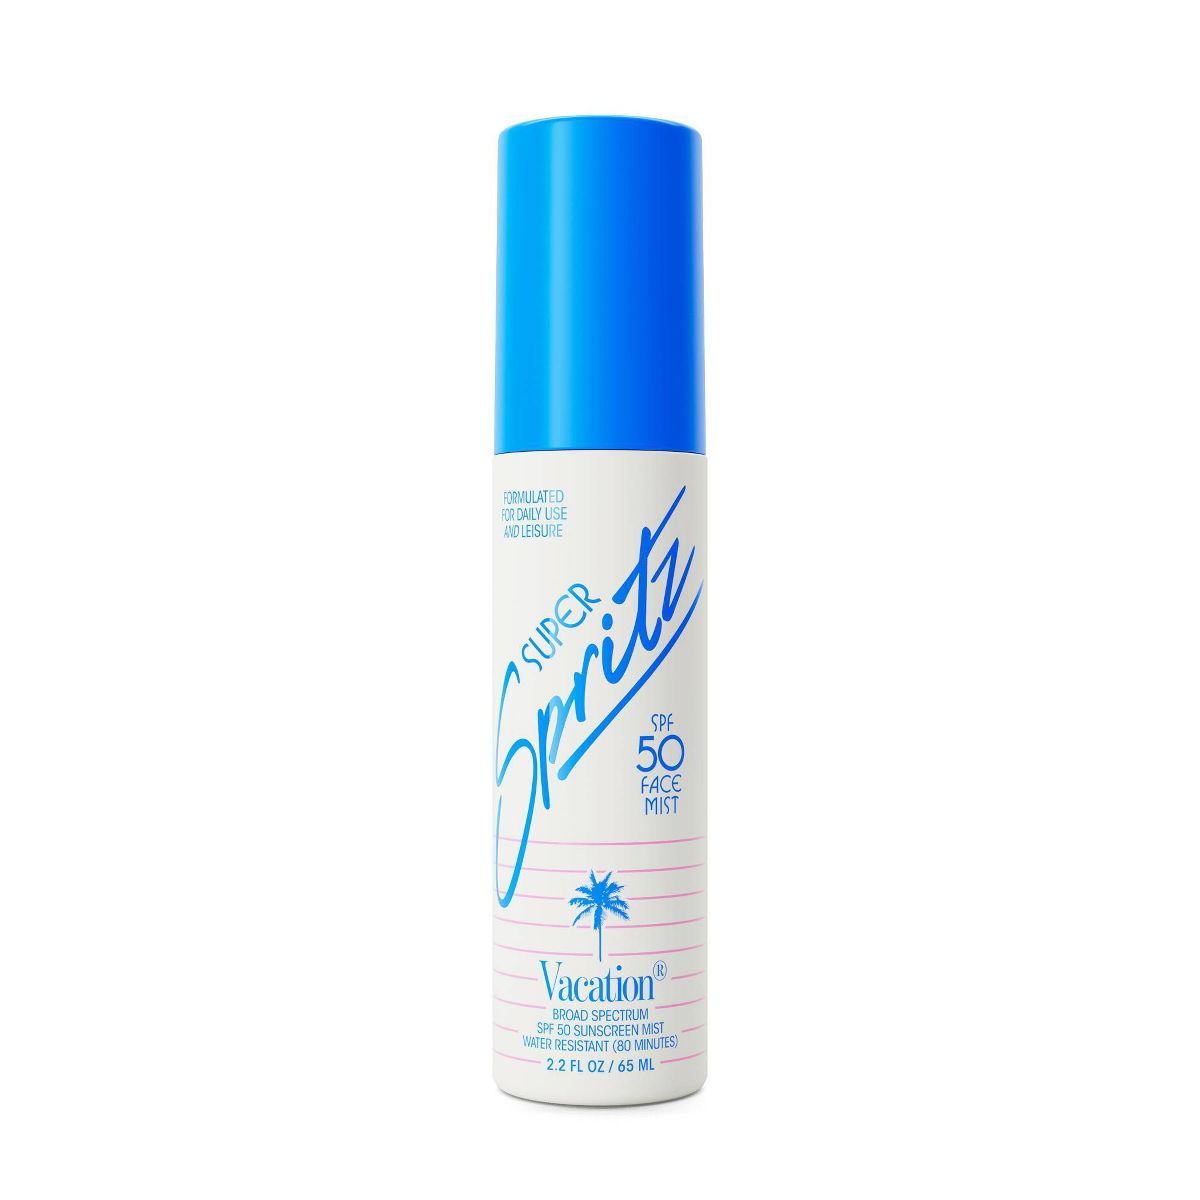 Vacation Super Spritz Face Mist - SPF 50 - 2.2 fl oz | Target